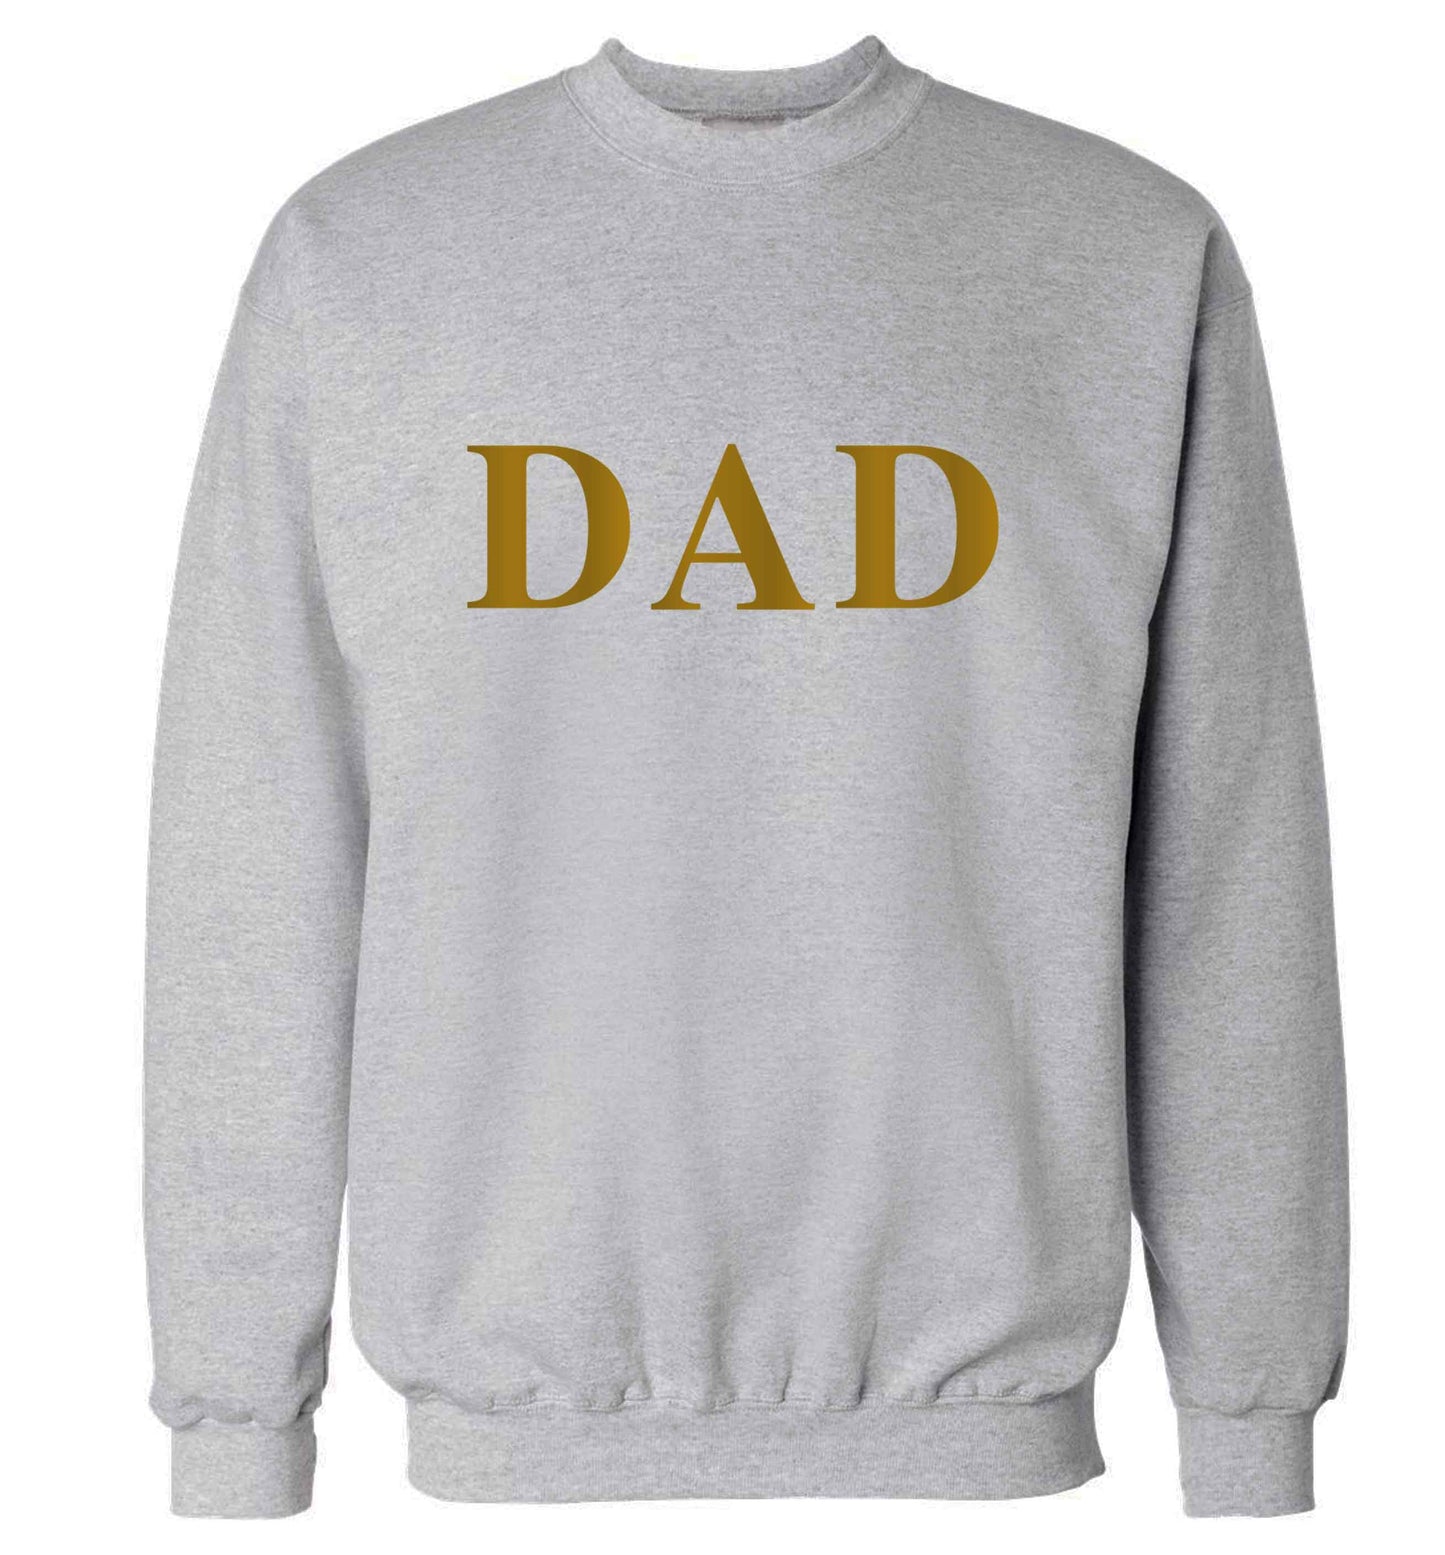 Dad adult's unisex grey sweater 2XL